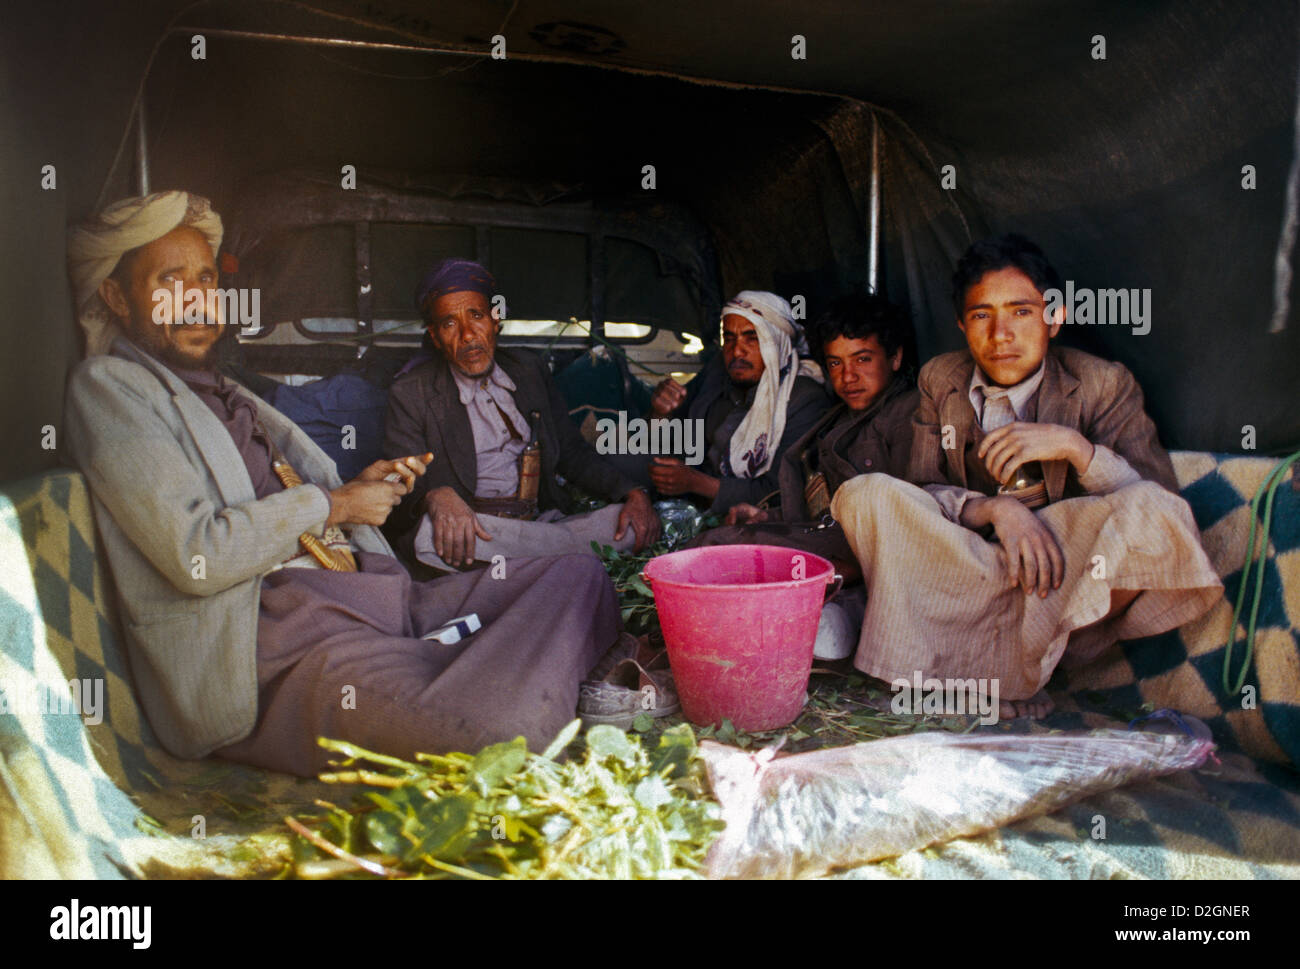 Sada Yemen Men Chewing Quat In Back Of Lorry Stock Photo